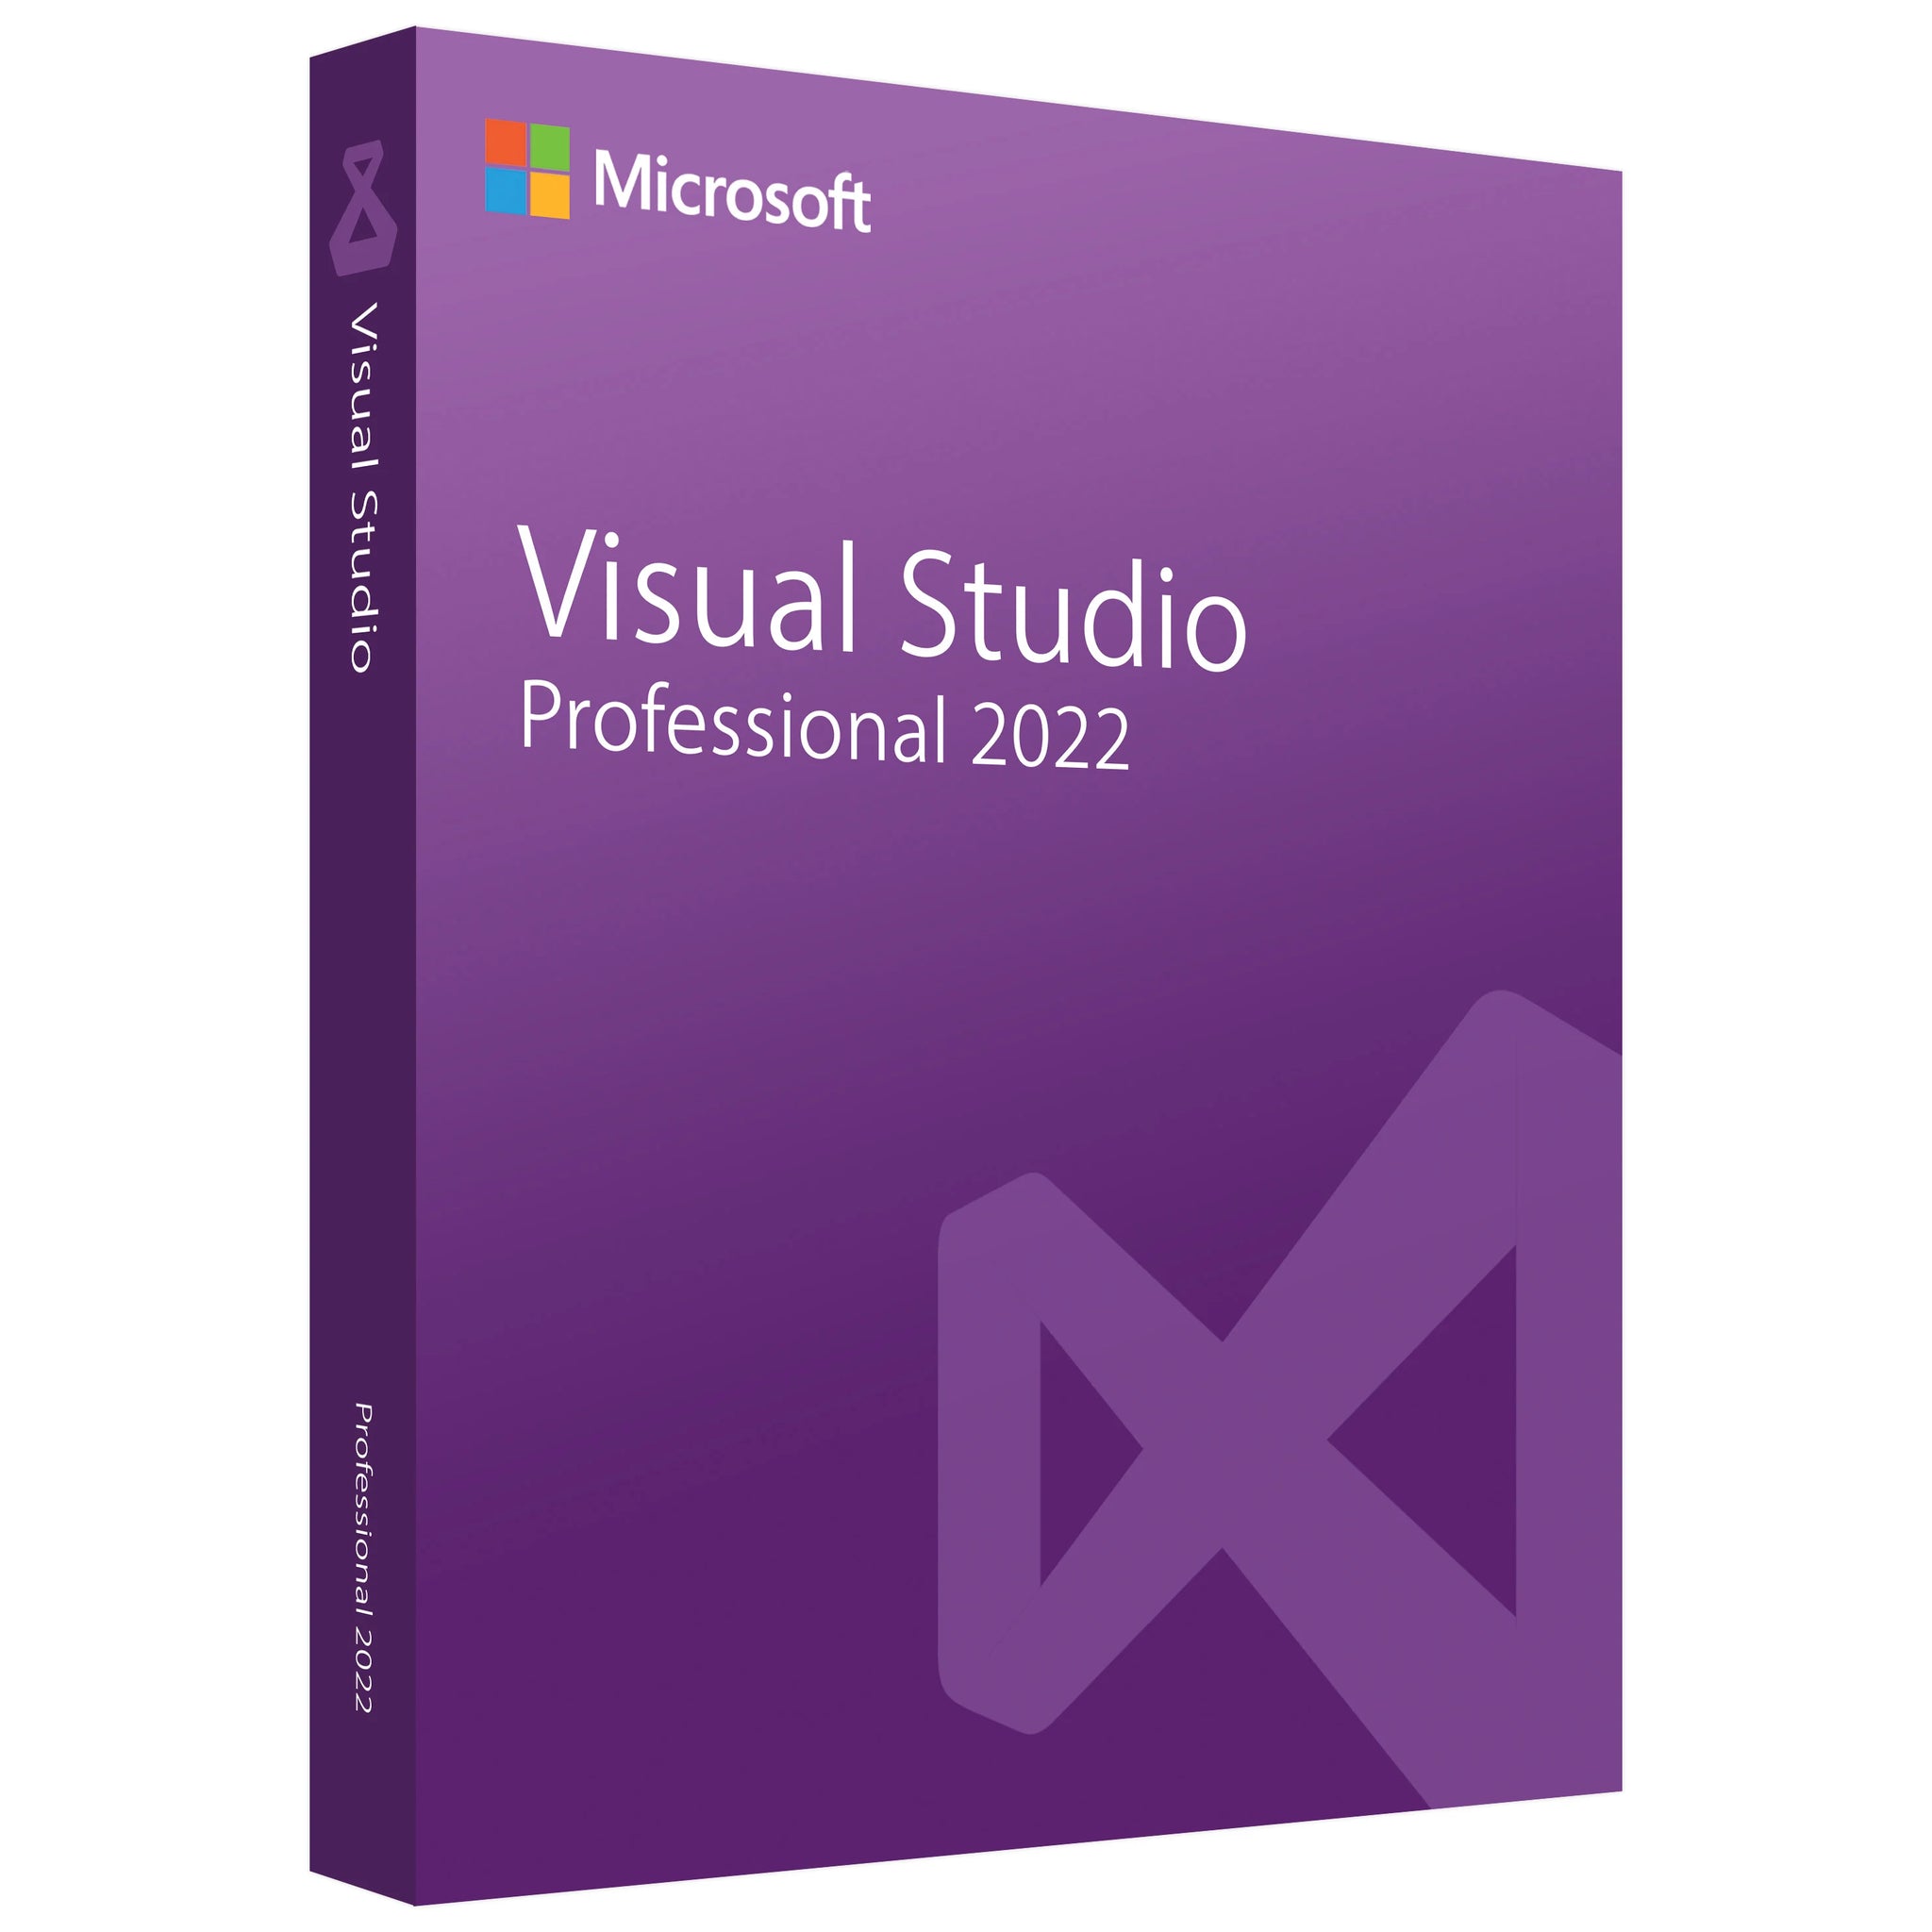 Microsoft Visual Studio 2022 Professional- Lifetime License Key